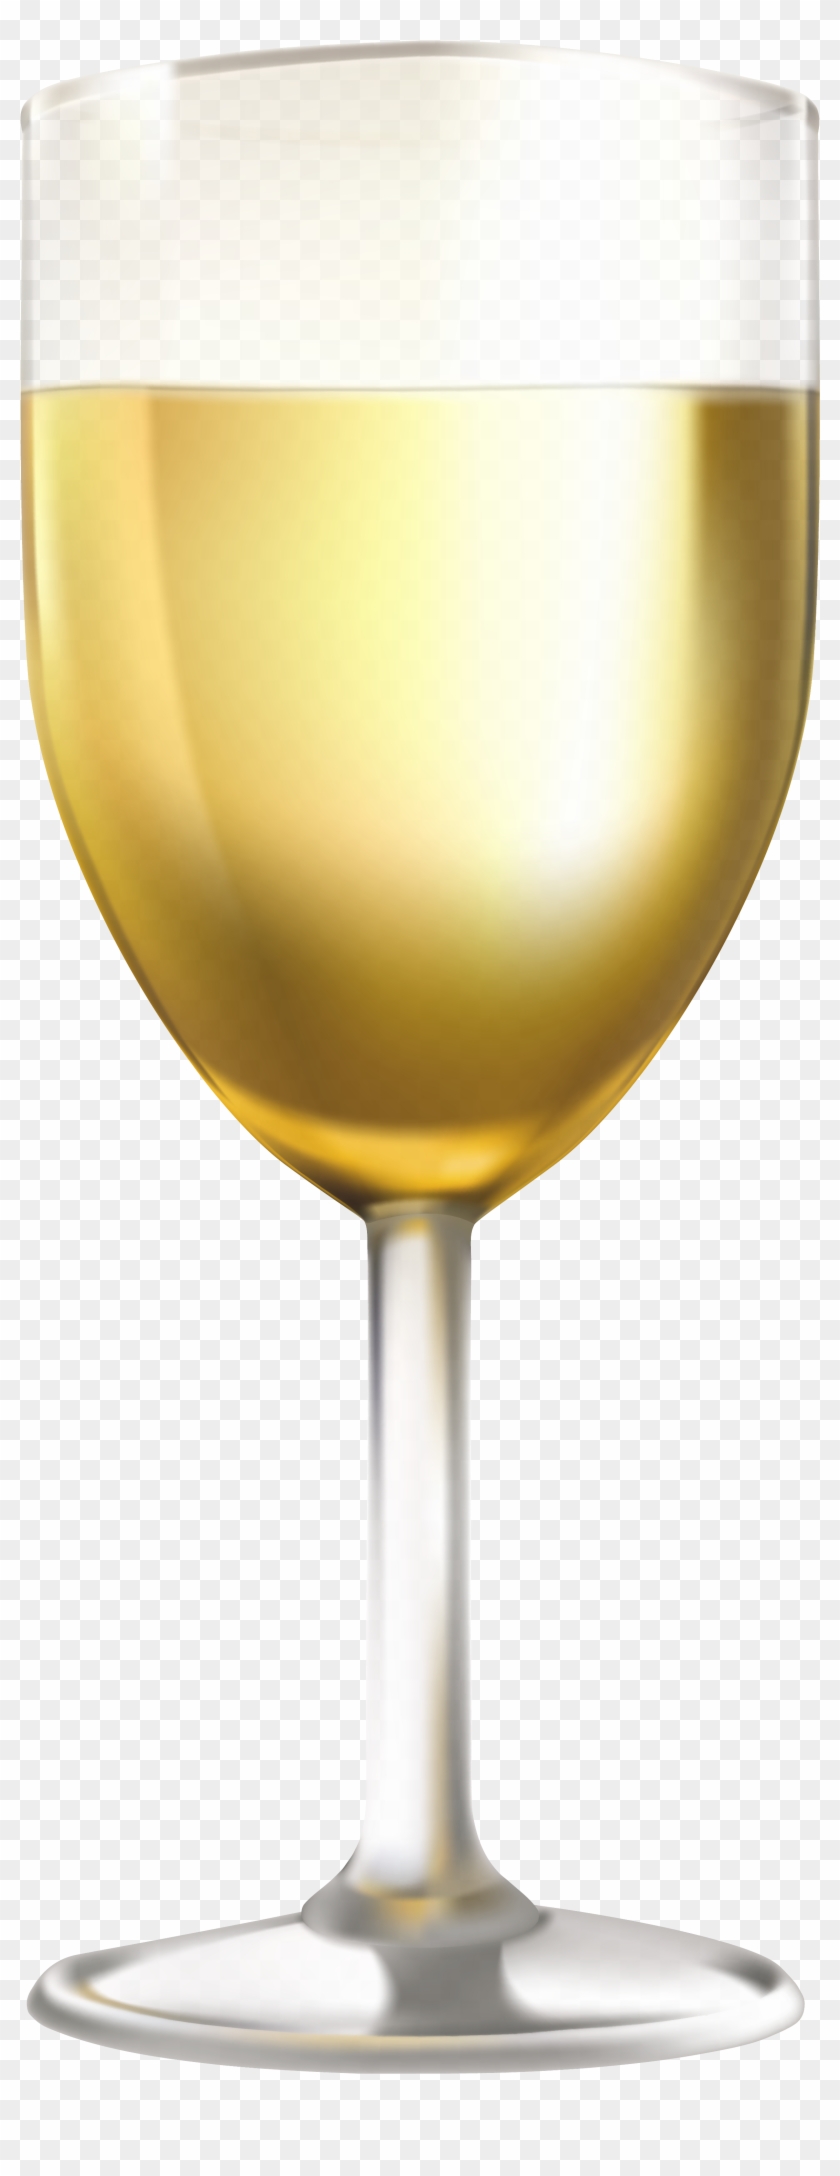 White Wine Glass Clip Art Image - White Wine Glass Png #532601